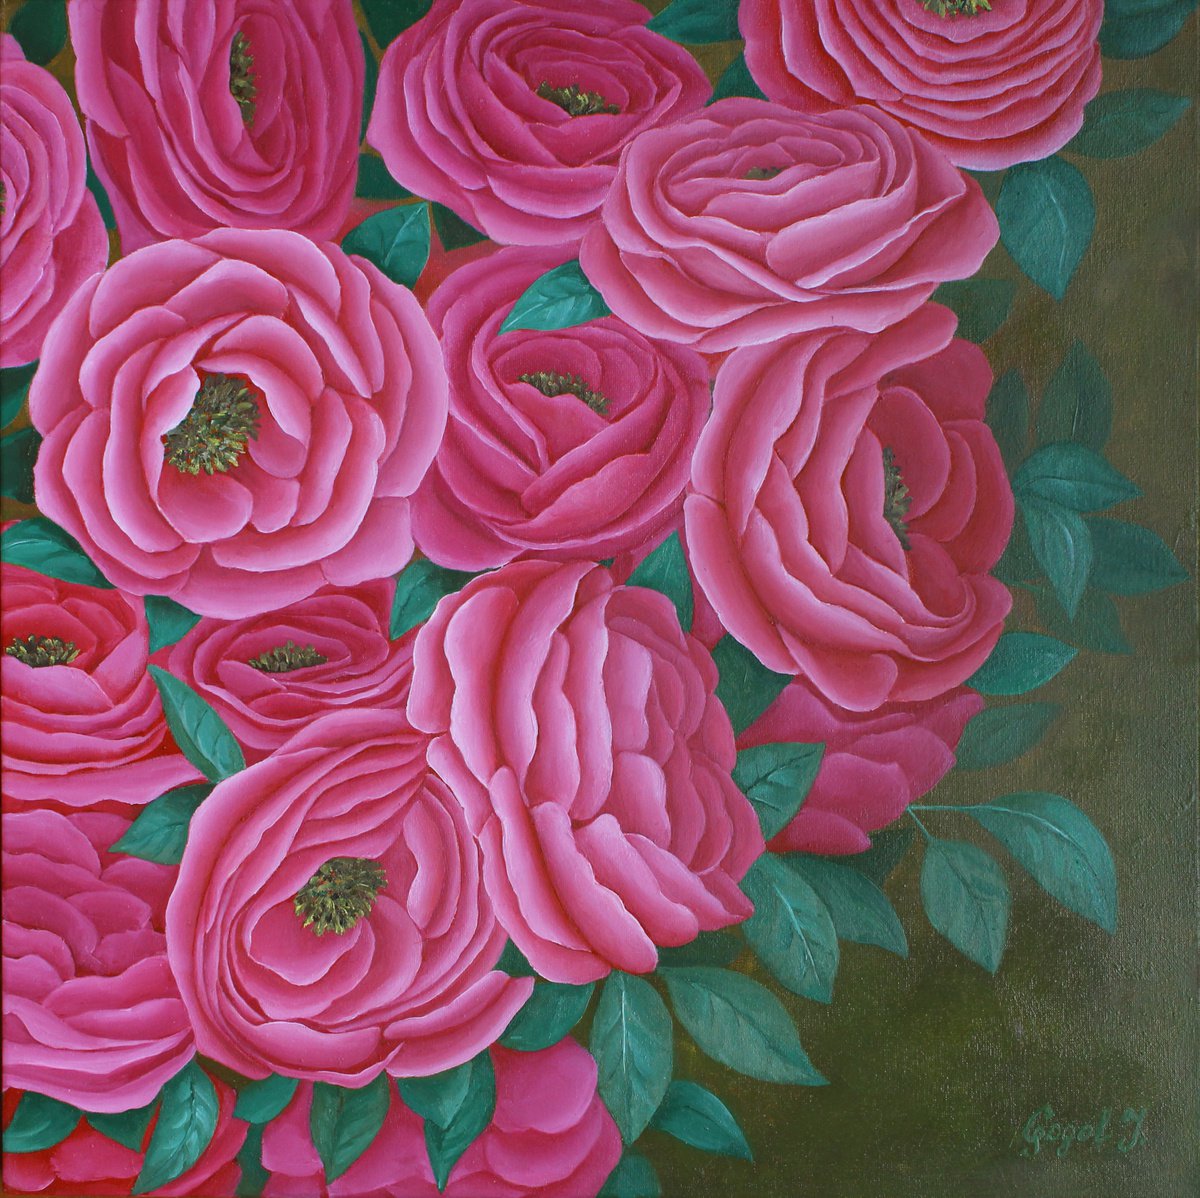 Rosebush by Julia Gogol